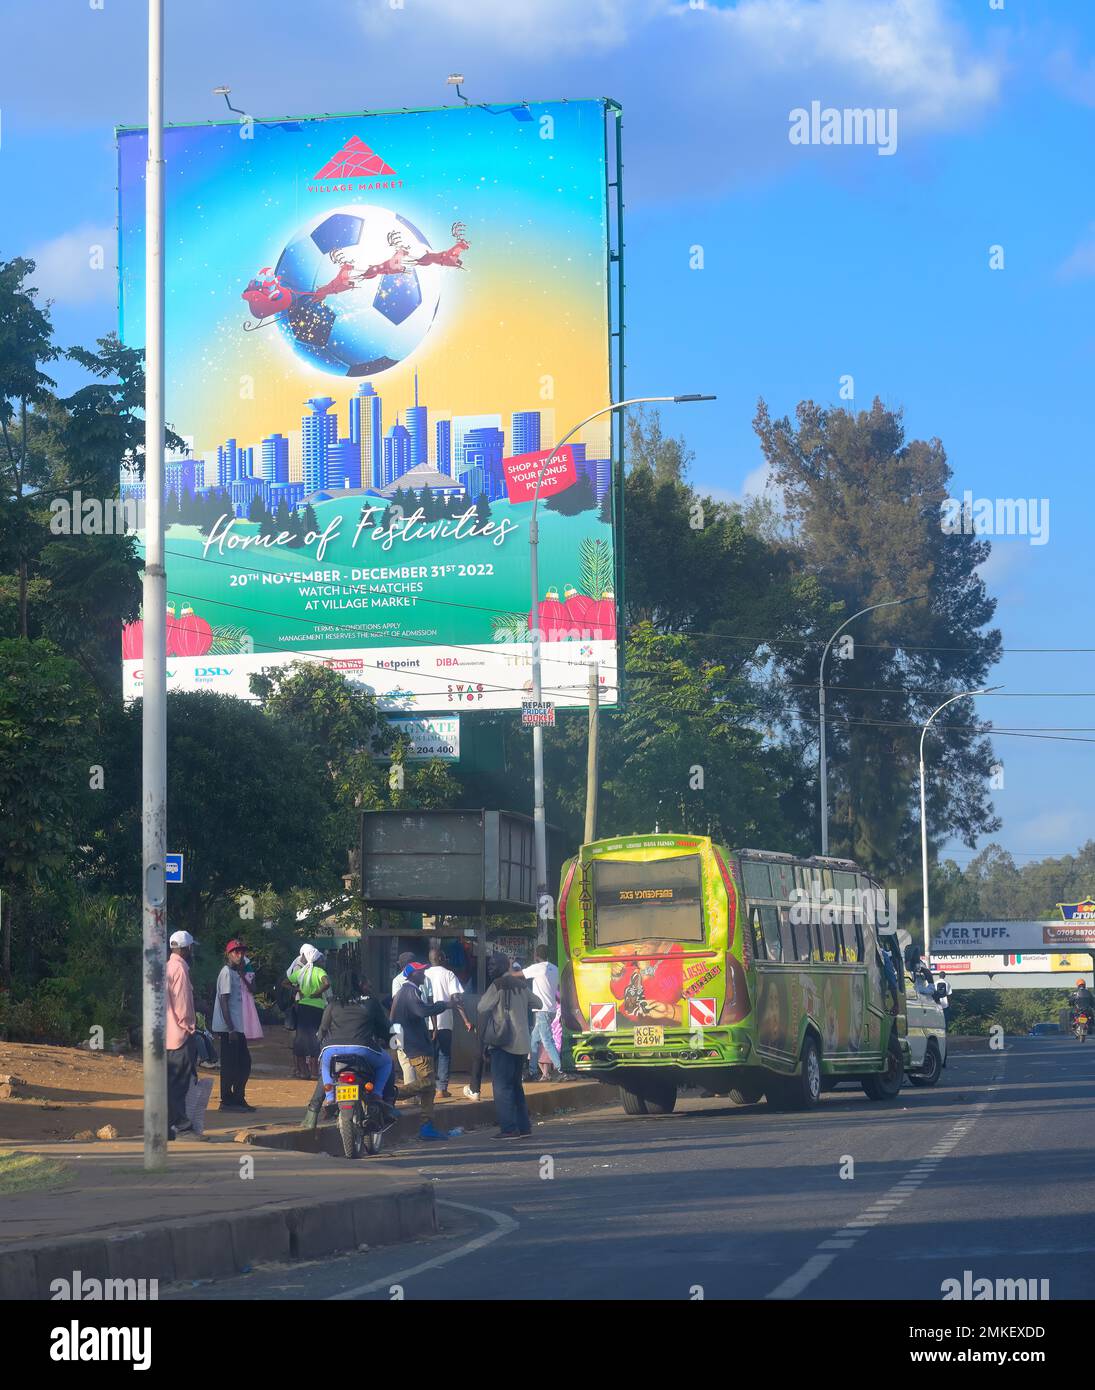 Matatus dominate the traffic scene in central Nairobi and its suburbs, Nairobi KE Stock Photo